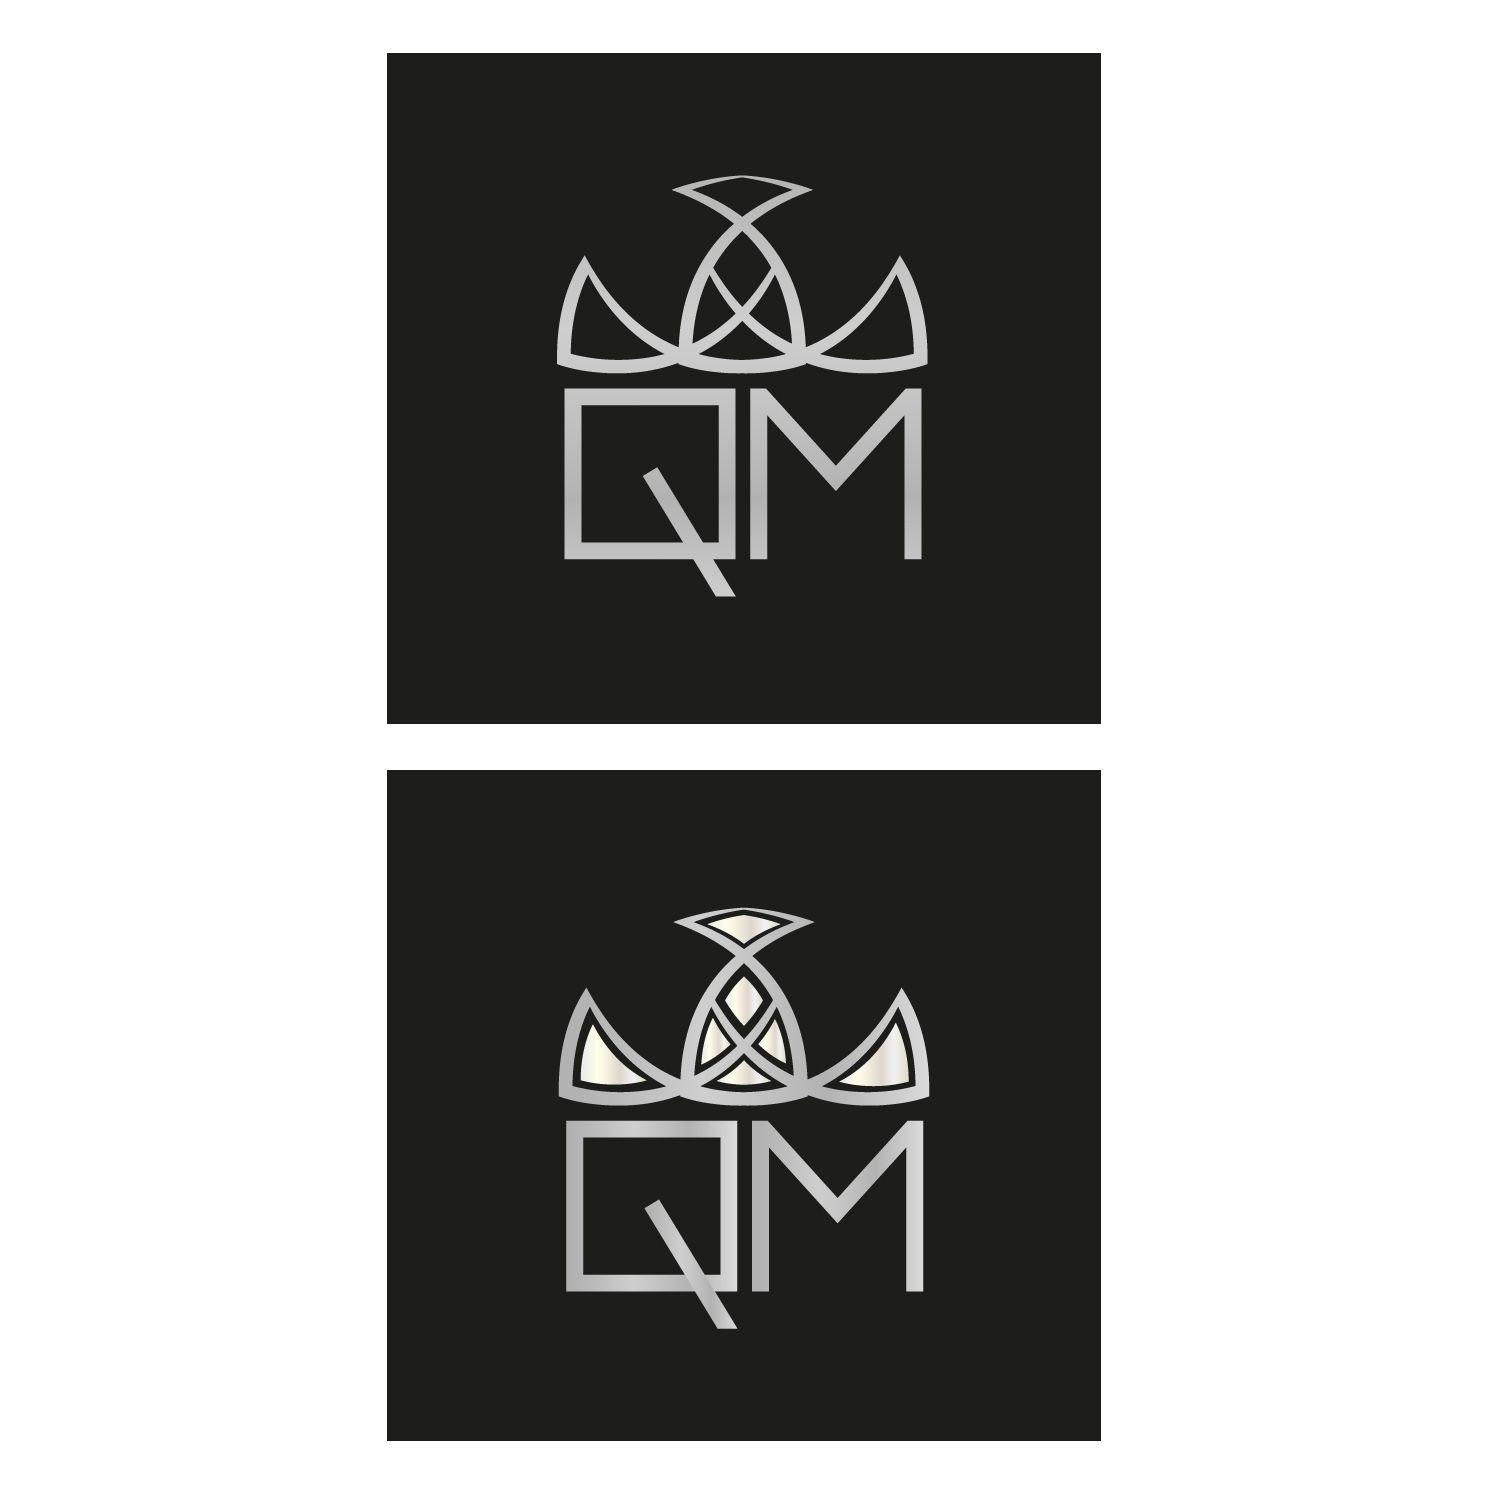 Feminine Cross Logo - Feminine, Elegant, Cosmetics Logo Design for Q M by MANOJBARMAN ...